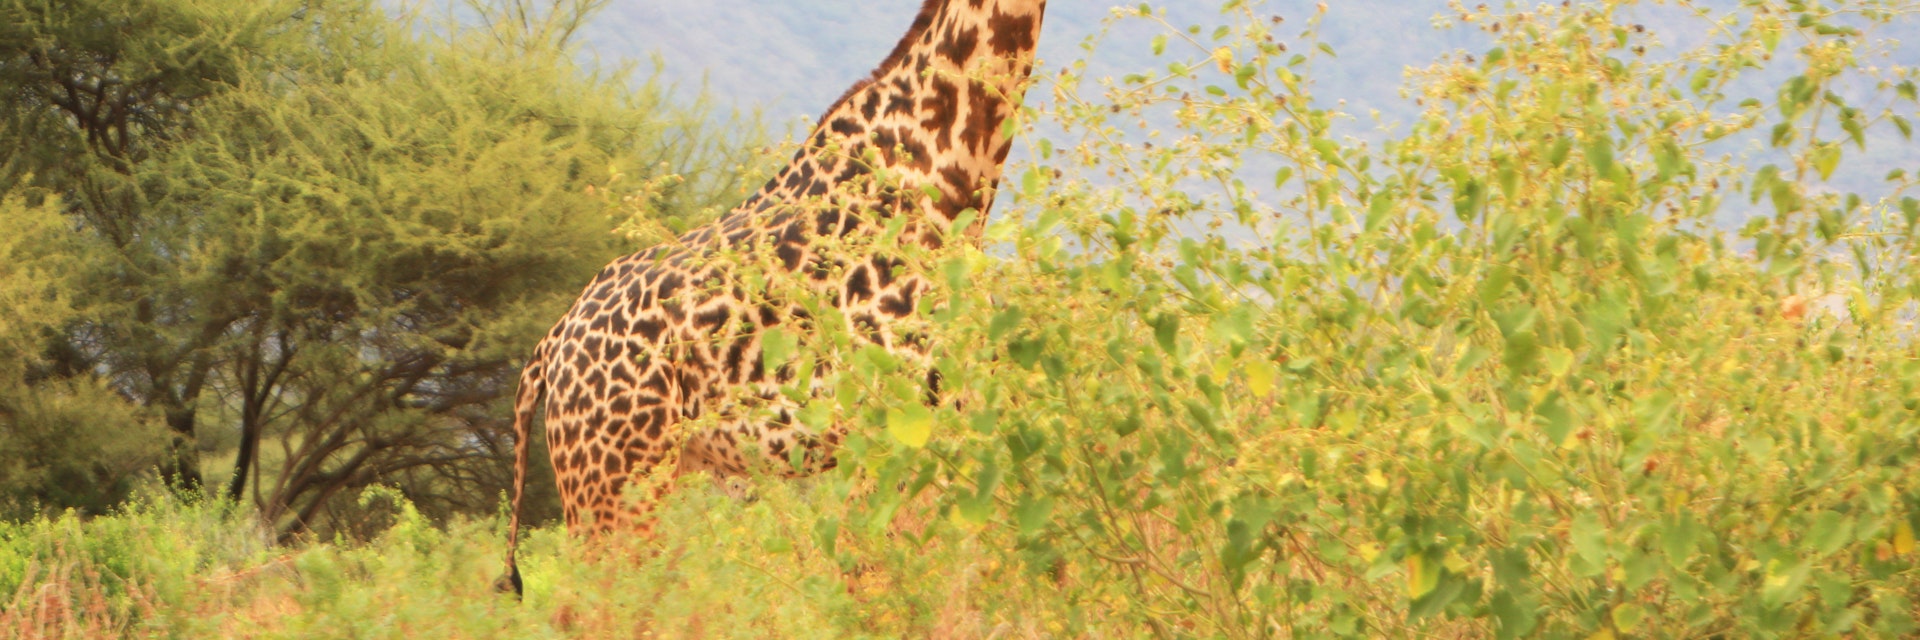 Masai giraffe in the Shompole Conservancy.